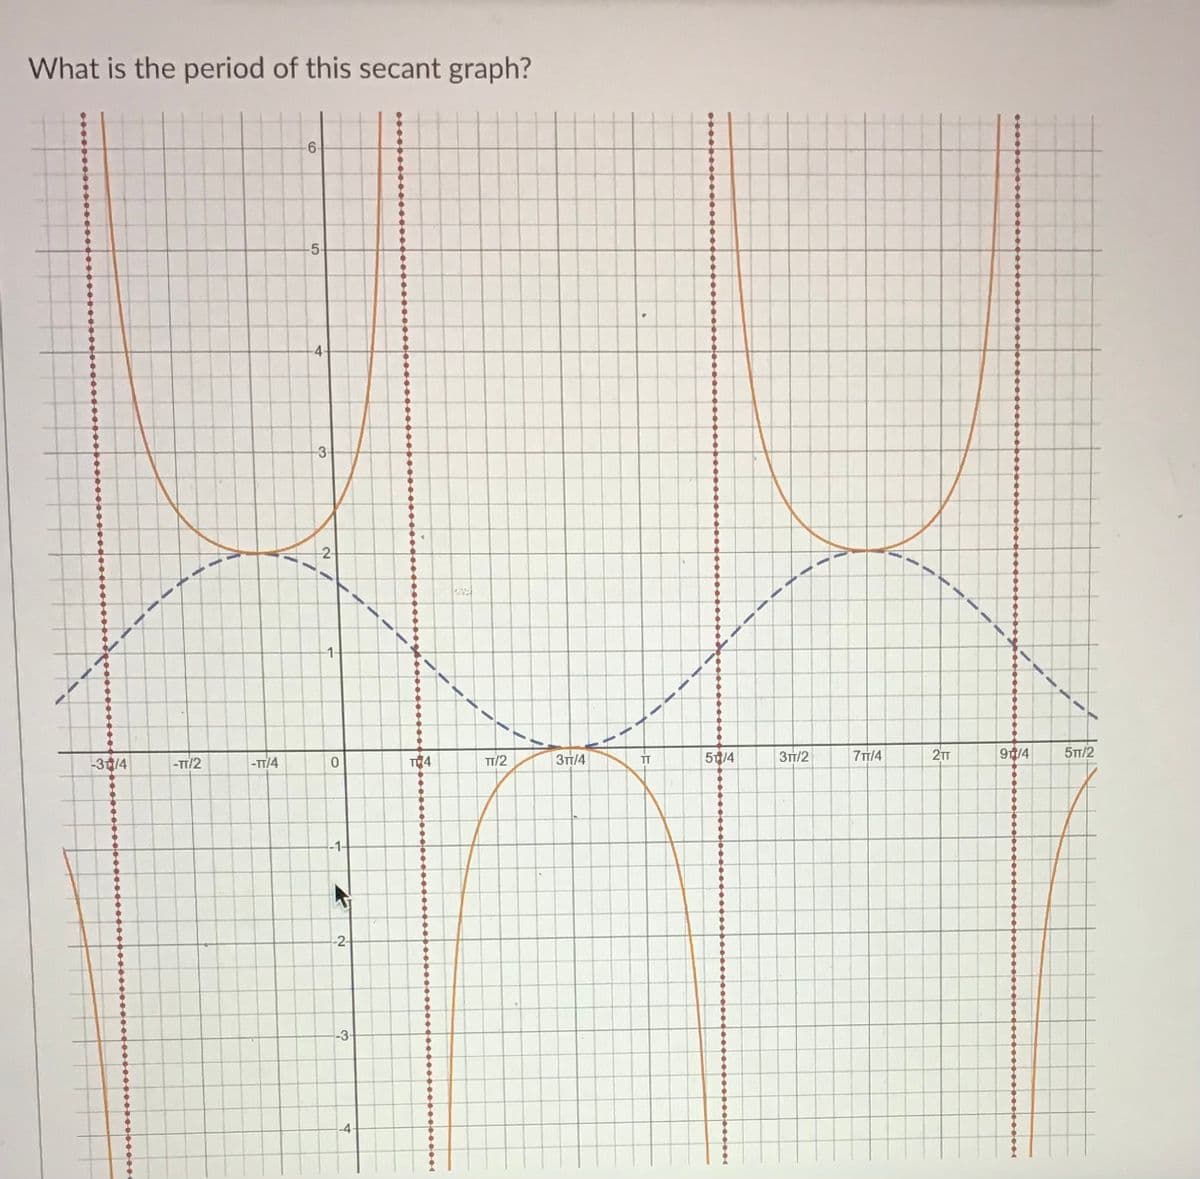 What is the period of this secant graph?
5-
-4
3-
1.
-3/4
-TT/2
-TT/4
0.
TT/2
3TT/4
TT
514
3TT/2
7TT/4
9/4
5TT/2
-1-
-2-
-3-
-4-
